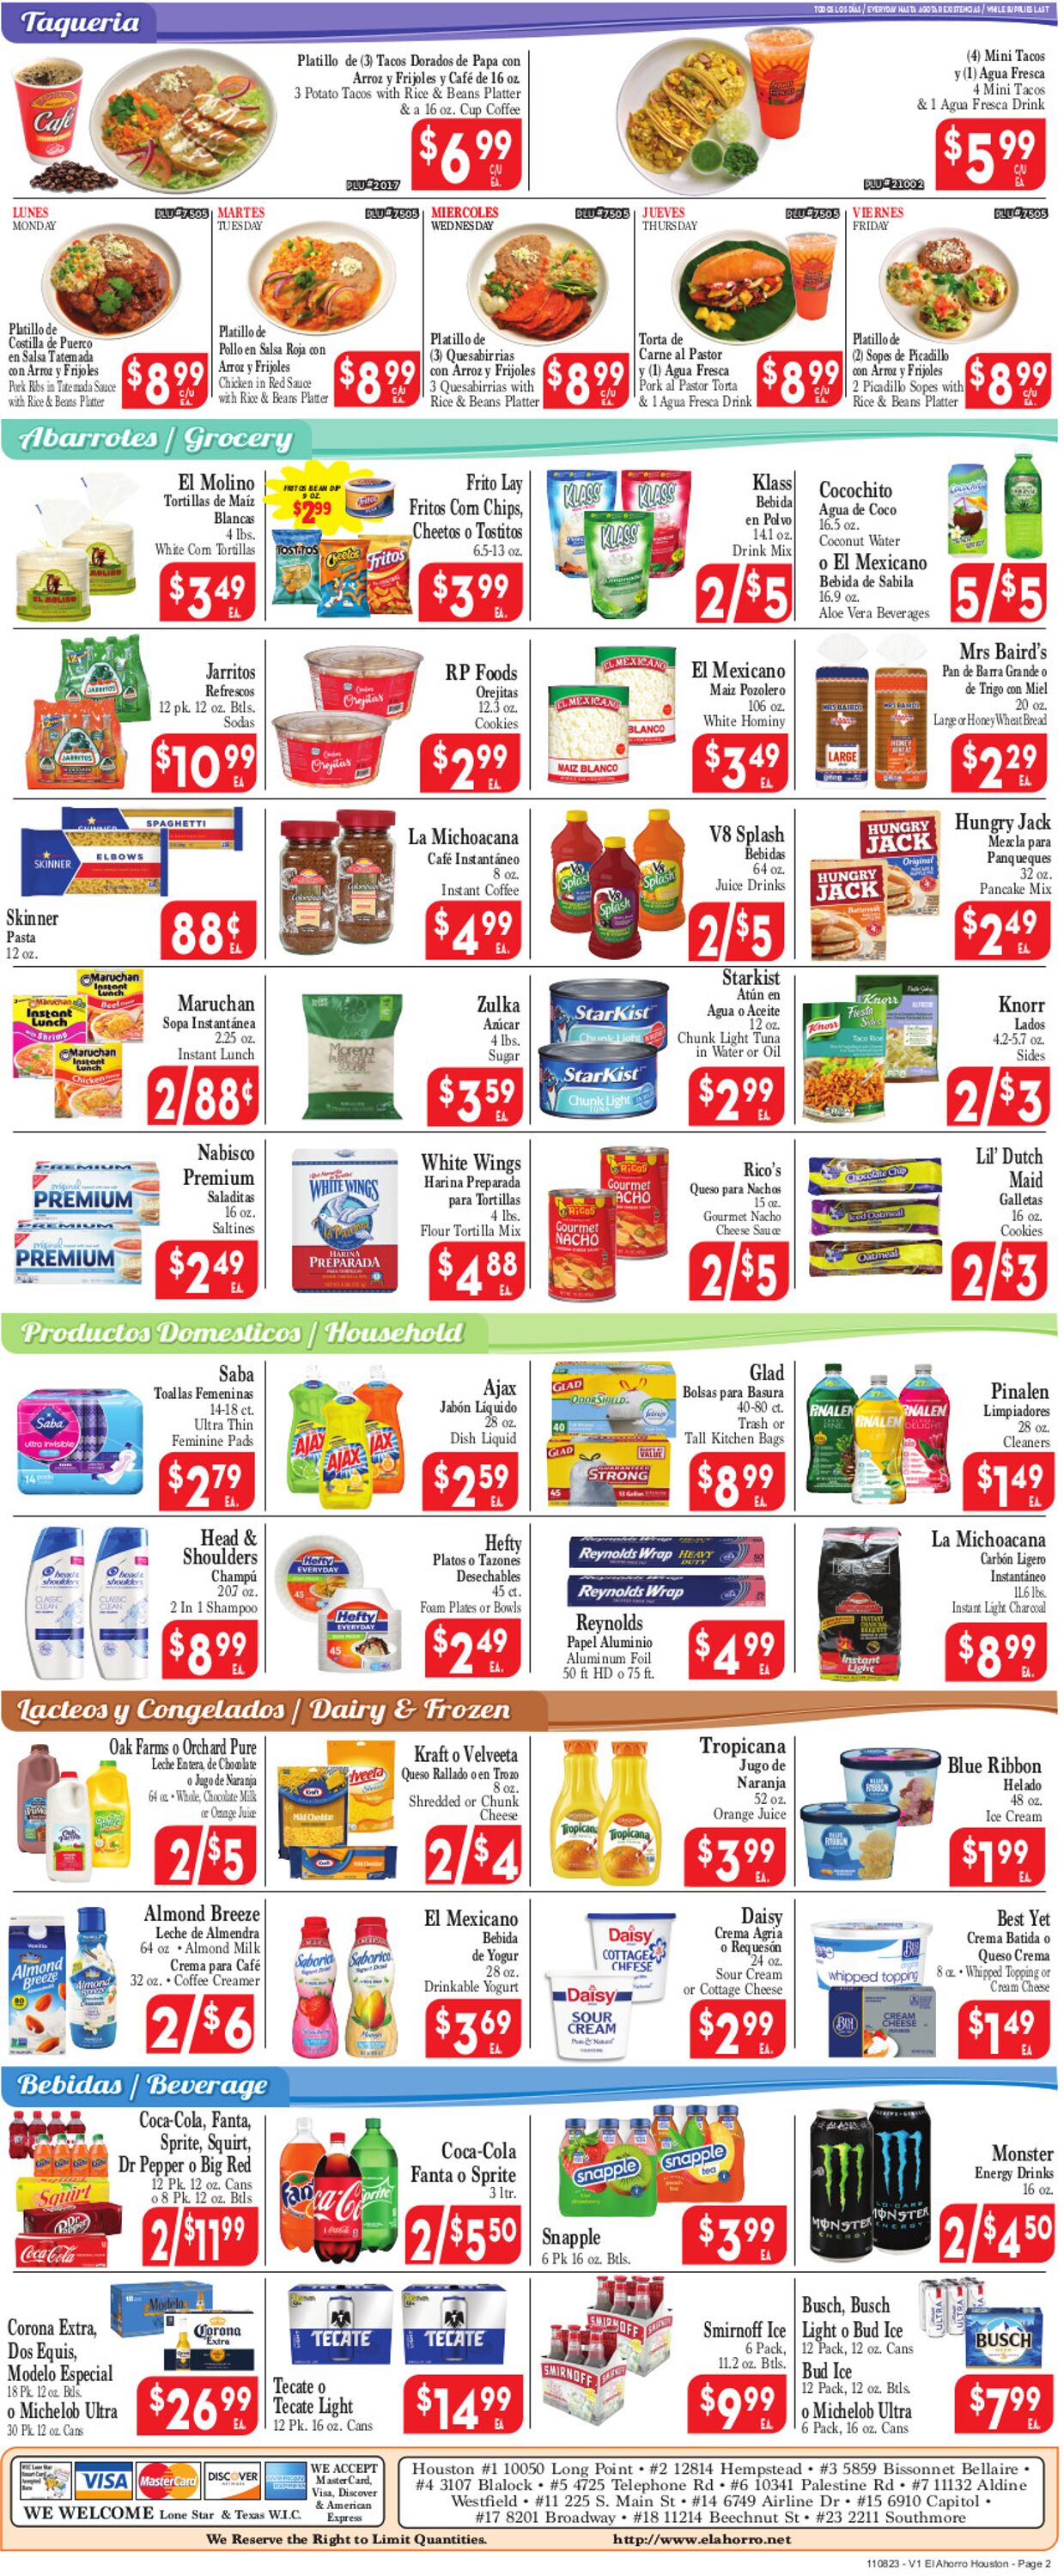 Catalogue El Ahorro Supermarket from 11/08/2023